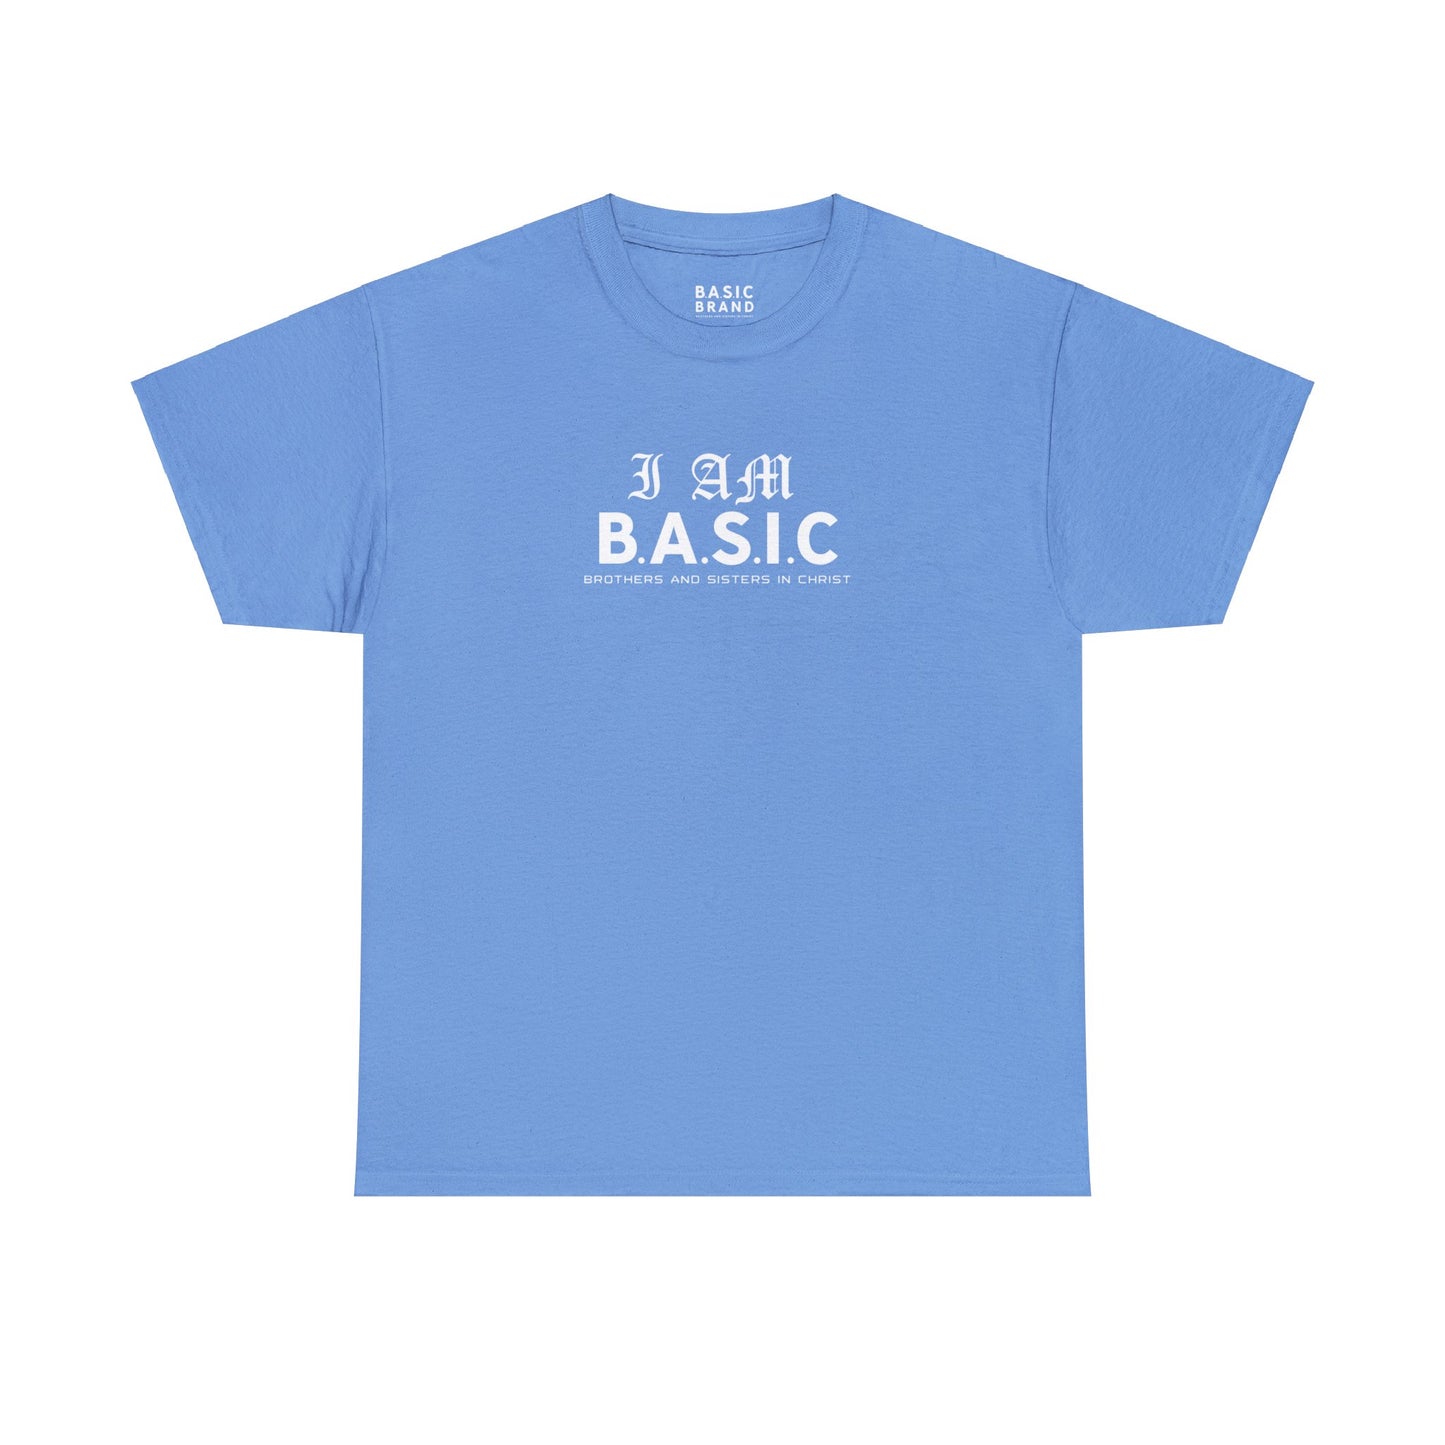 Men's B.A.S.I.C "I AM White Font" Tee Shirt